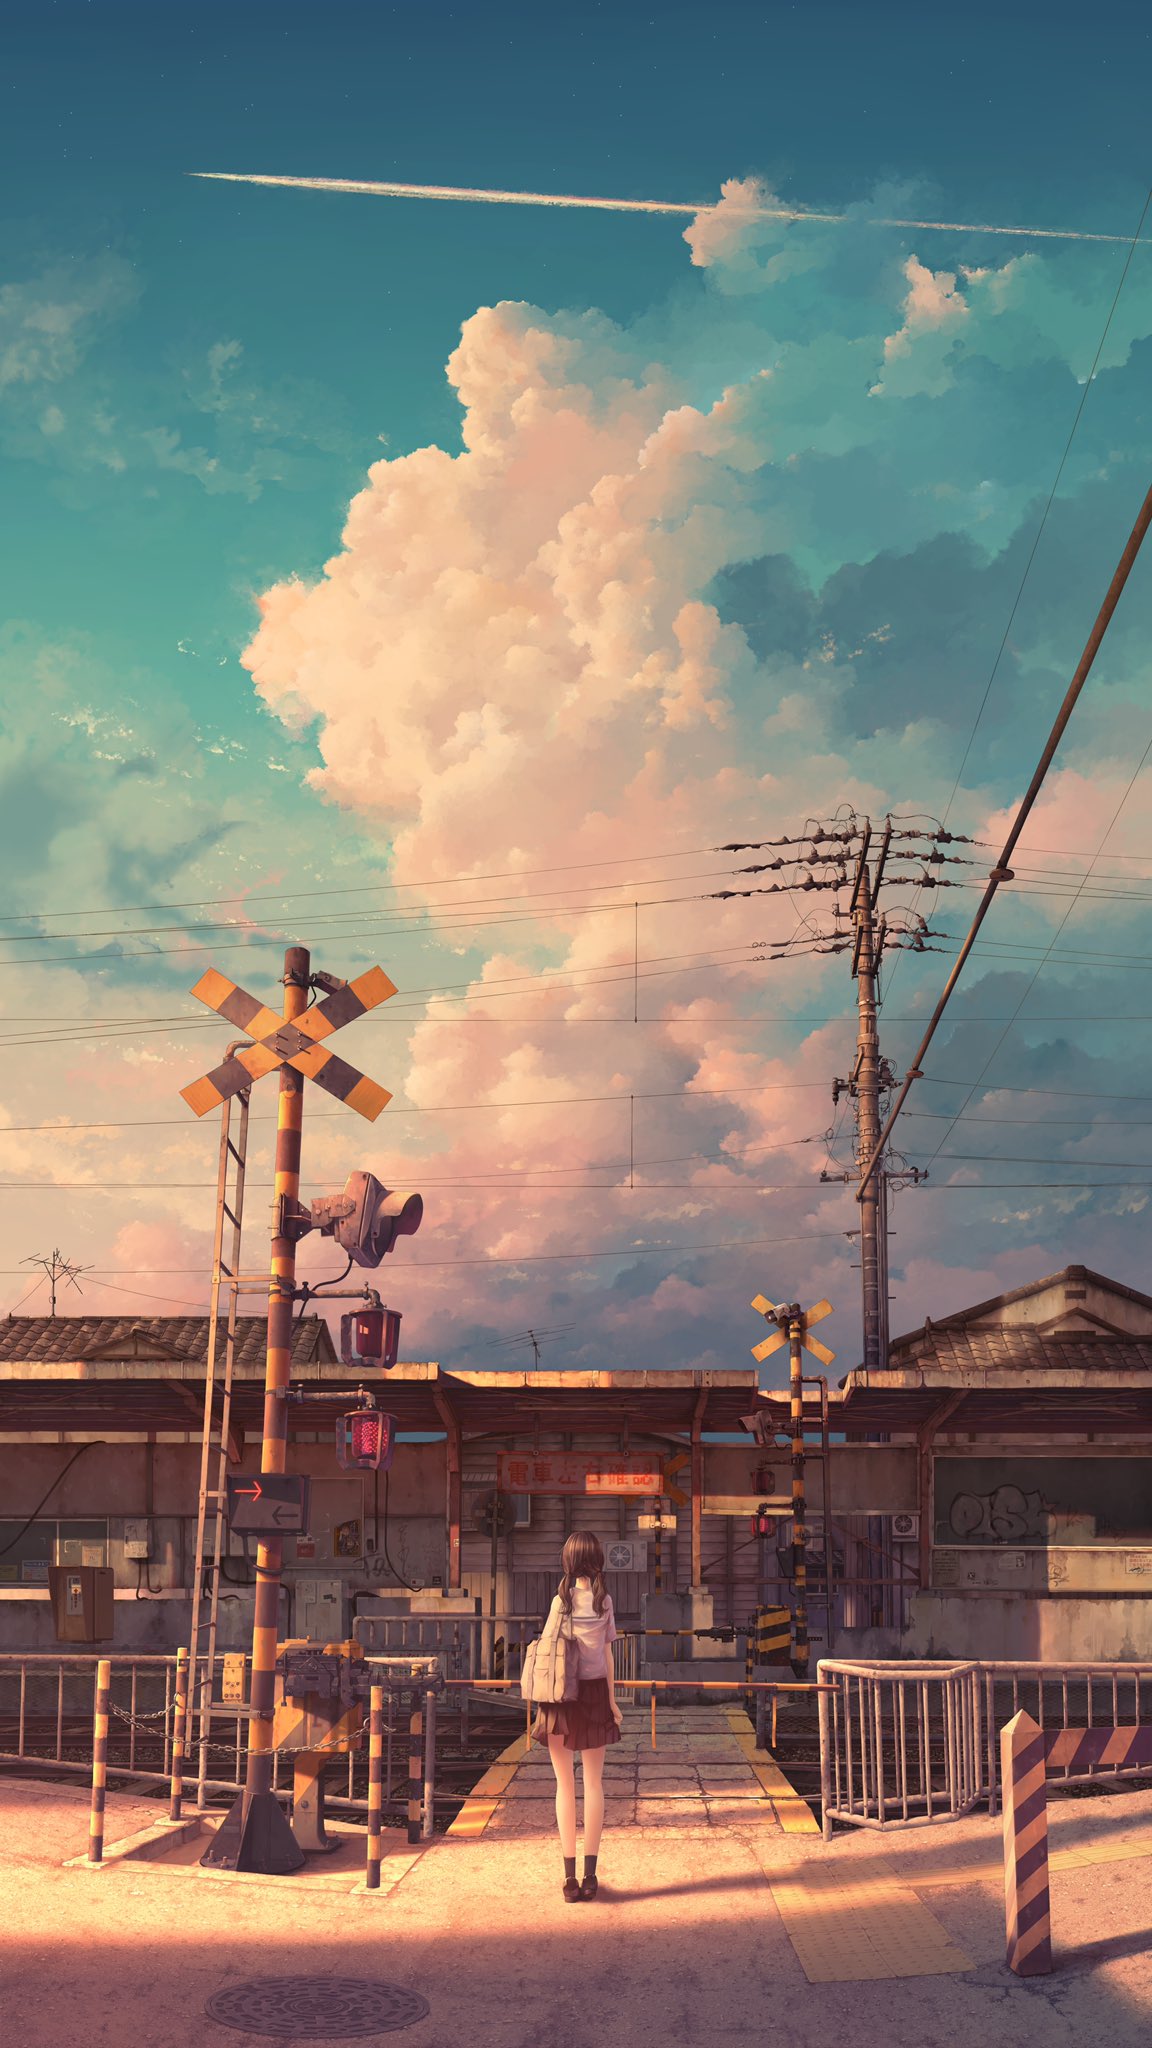 Anime 1152x2048 anime digital art artwork 2D portrait display sky clouds train station